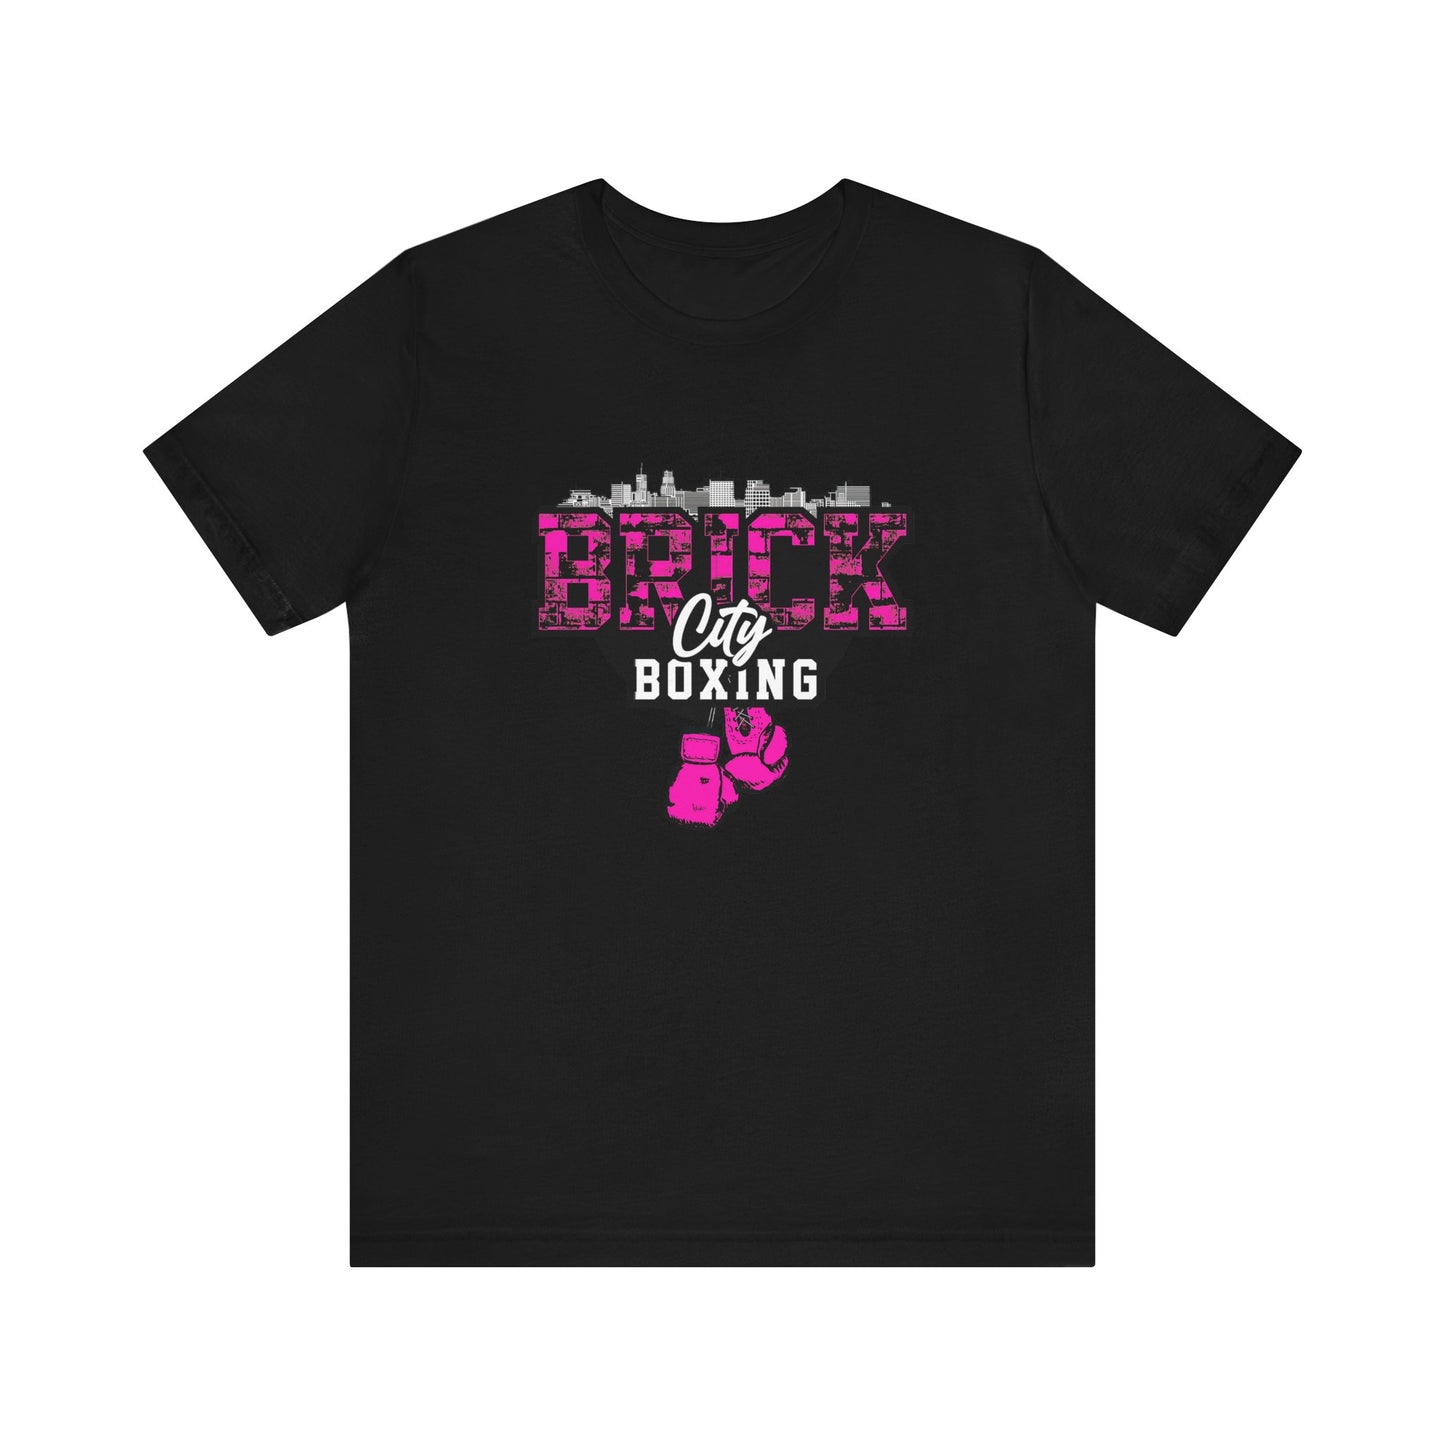 Pink Ribbon BCB Logo Tee